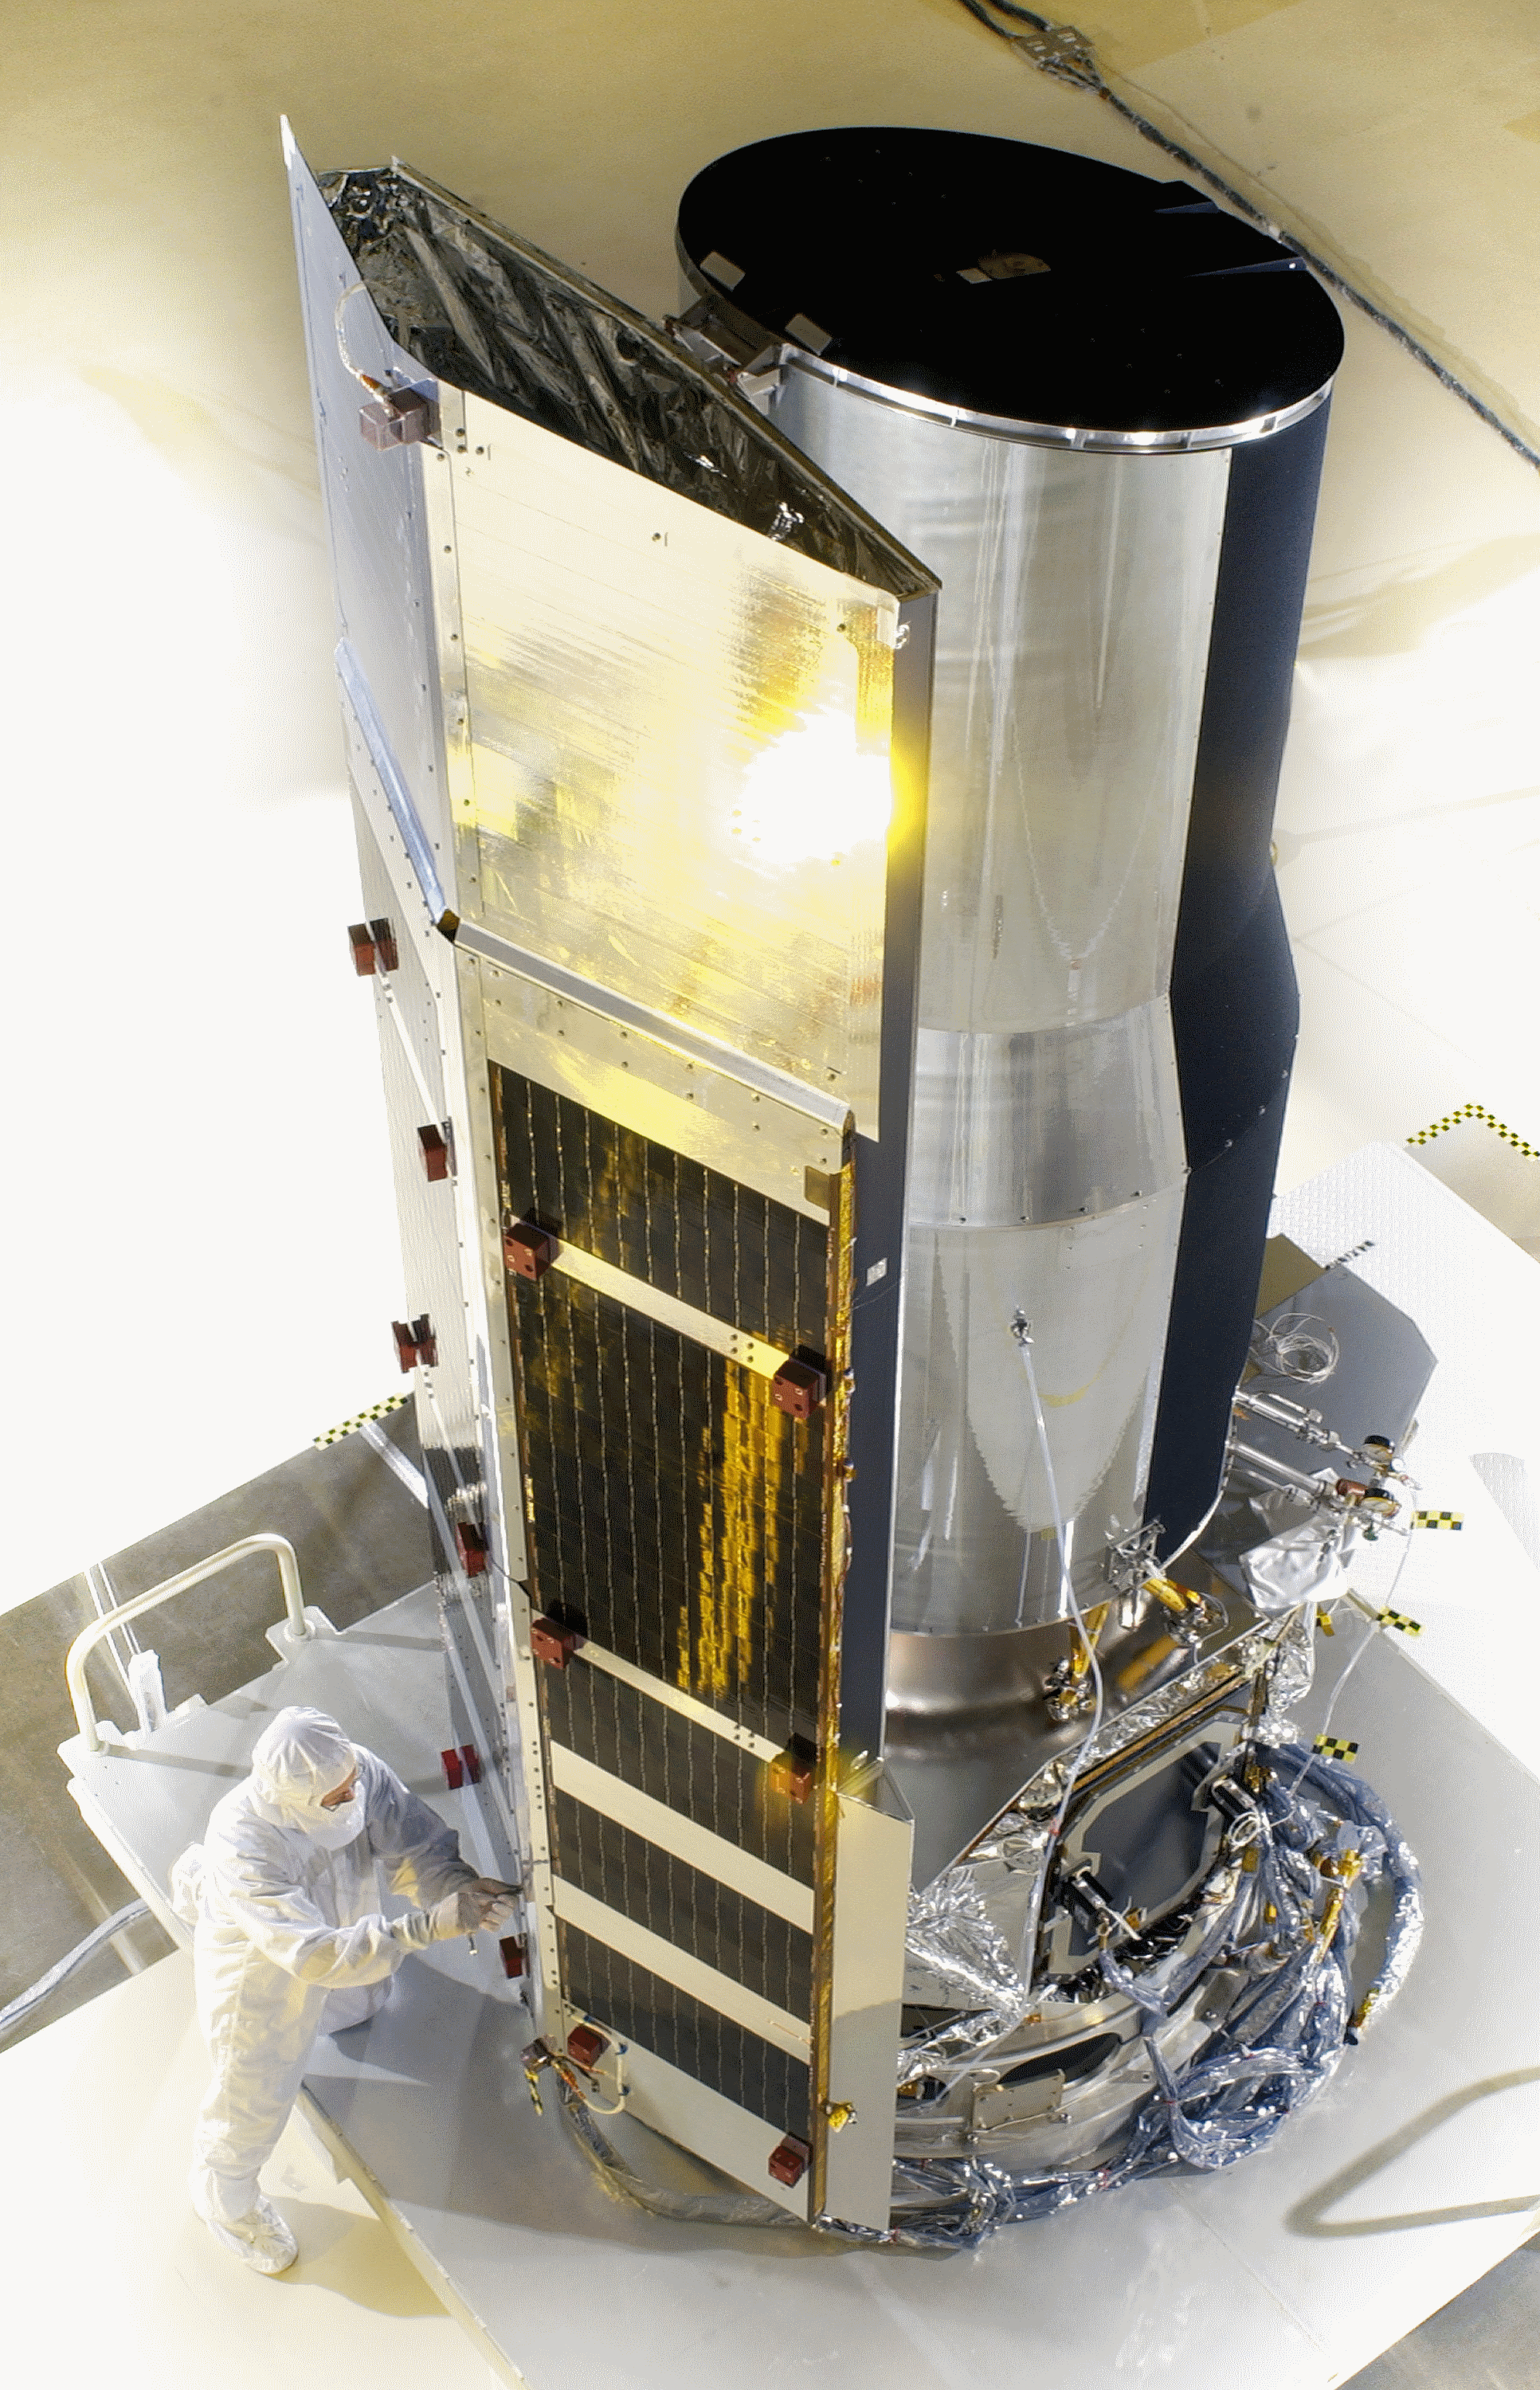 The Spitzer Space Telescope pre-launch. NASA -JPL - CALTECH